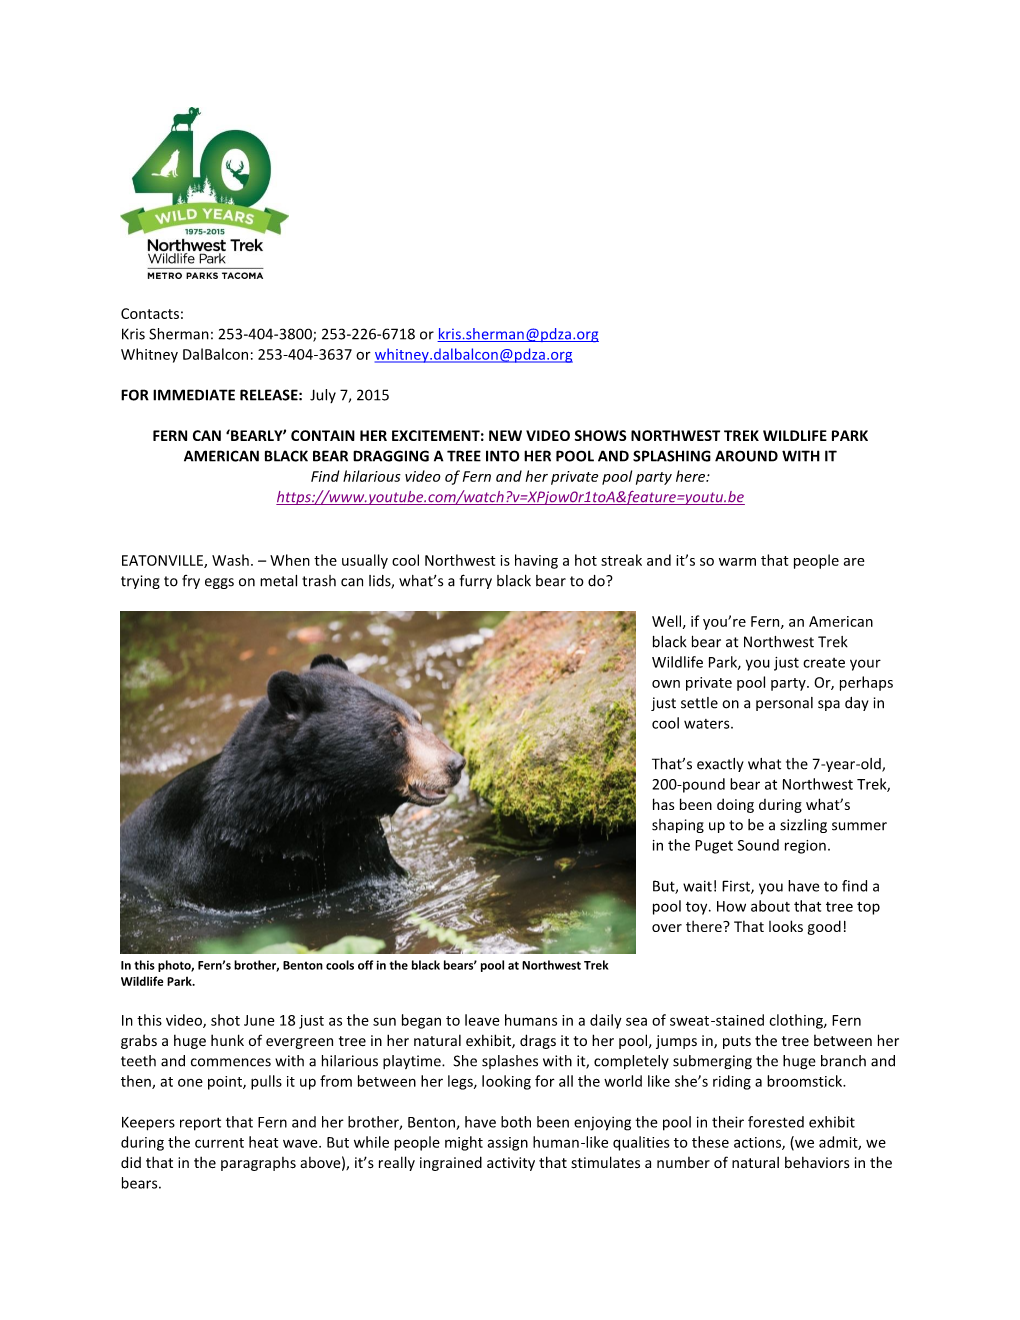 New Video Shows Northwest Trek Wildlife Park American Black Bear Dragging a Tree Into Her Pool